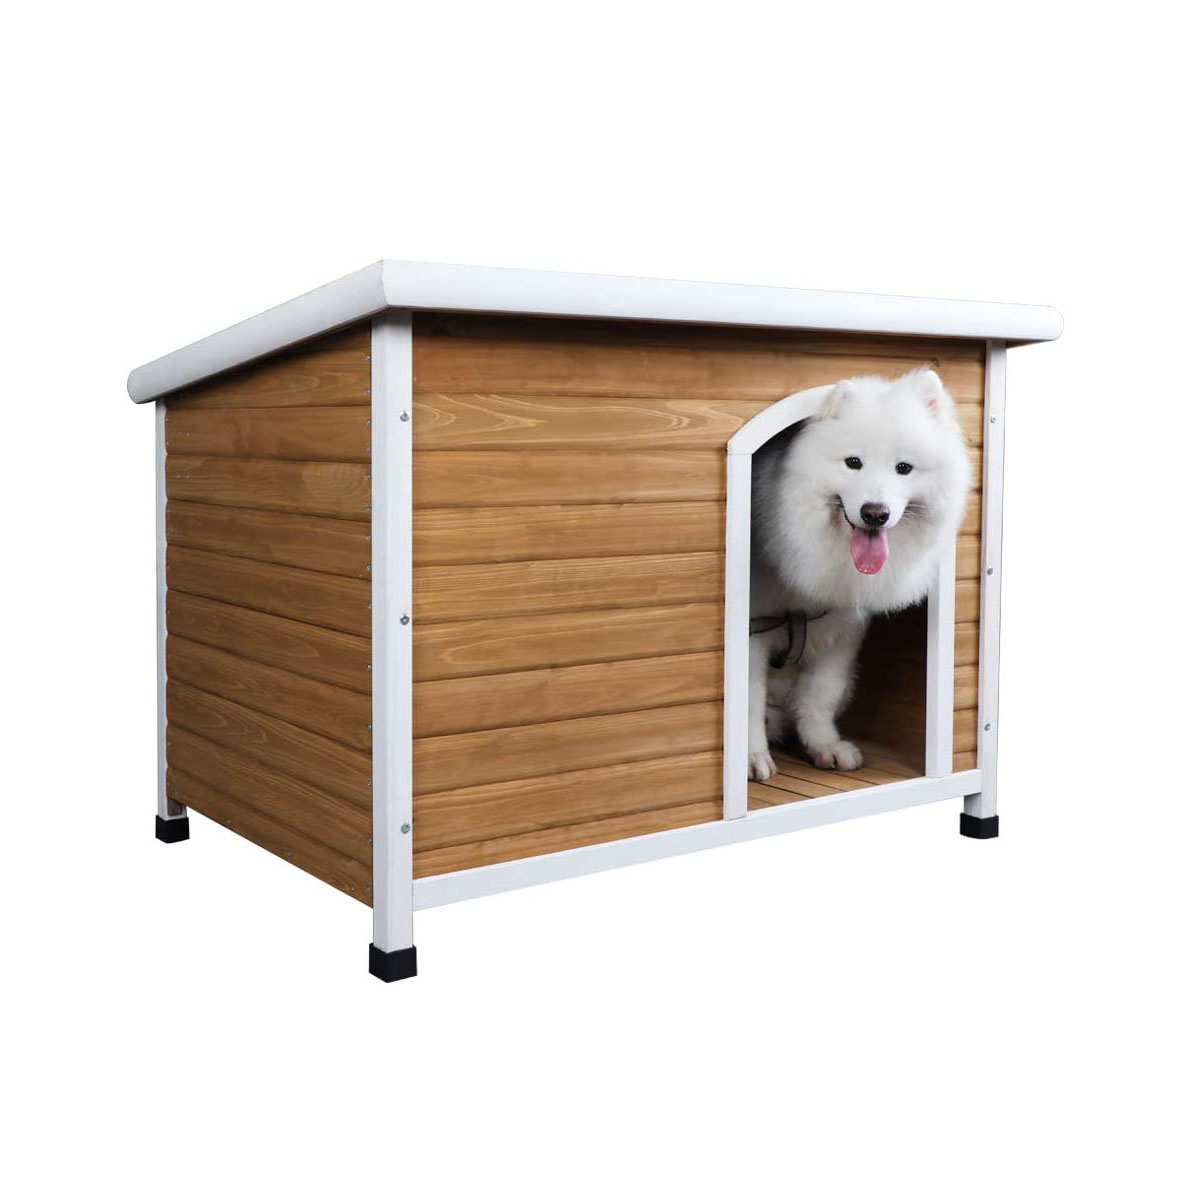 Best Dog Houses Options: Petsfit dog house